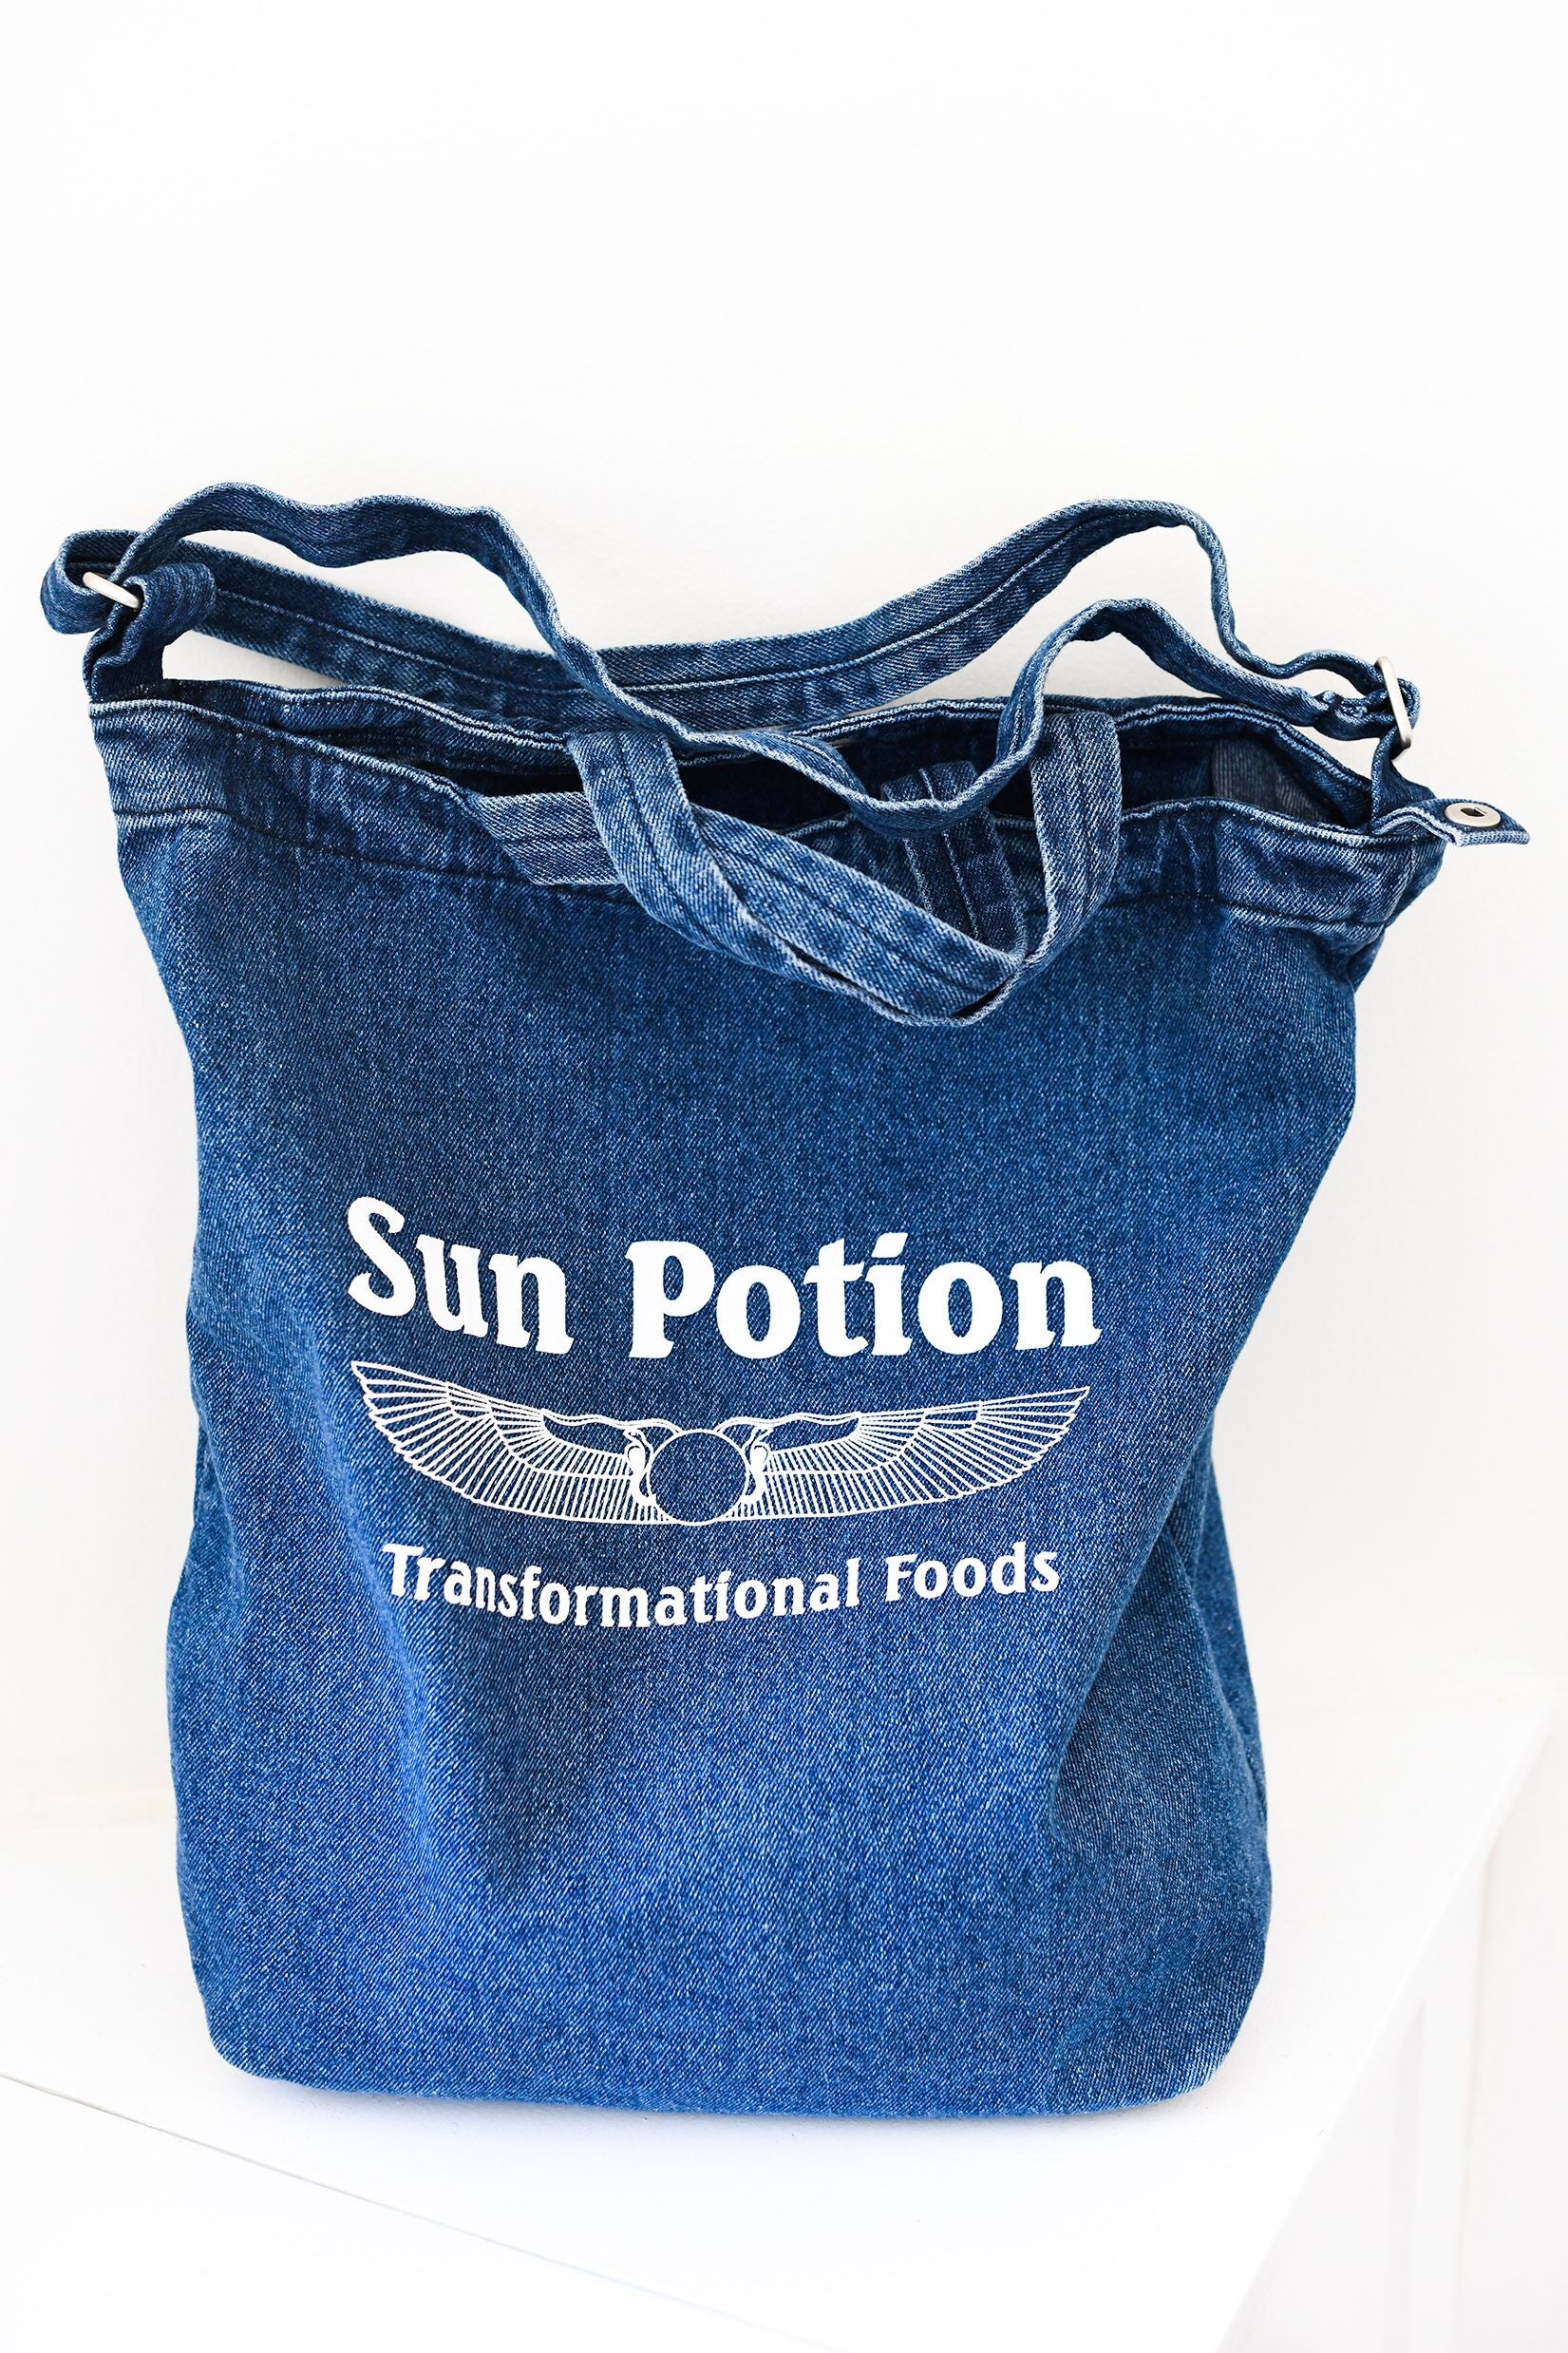 Sun Potion Denim Tote (100% Cotton)